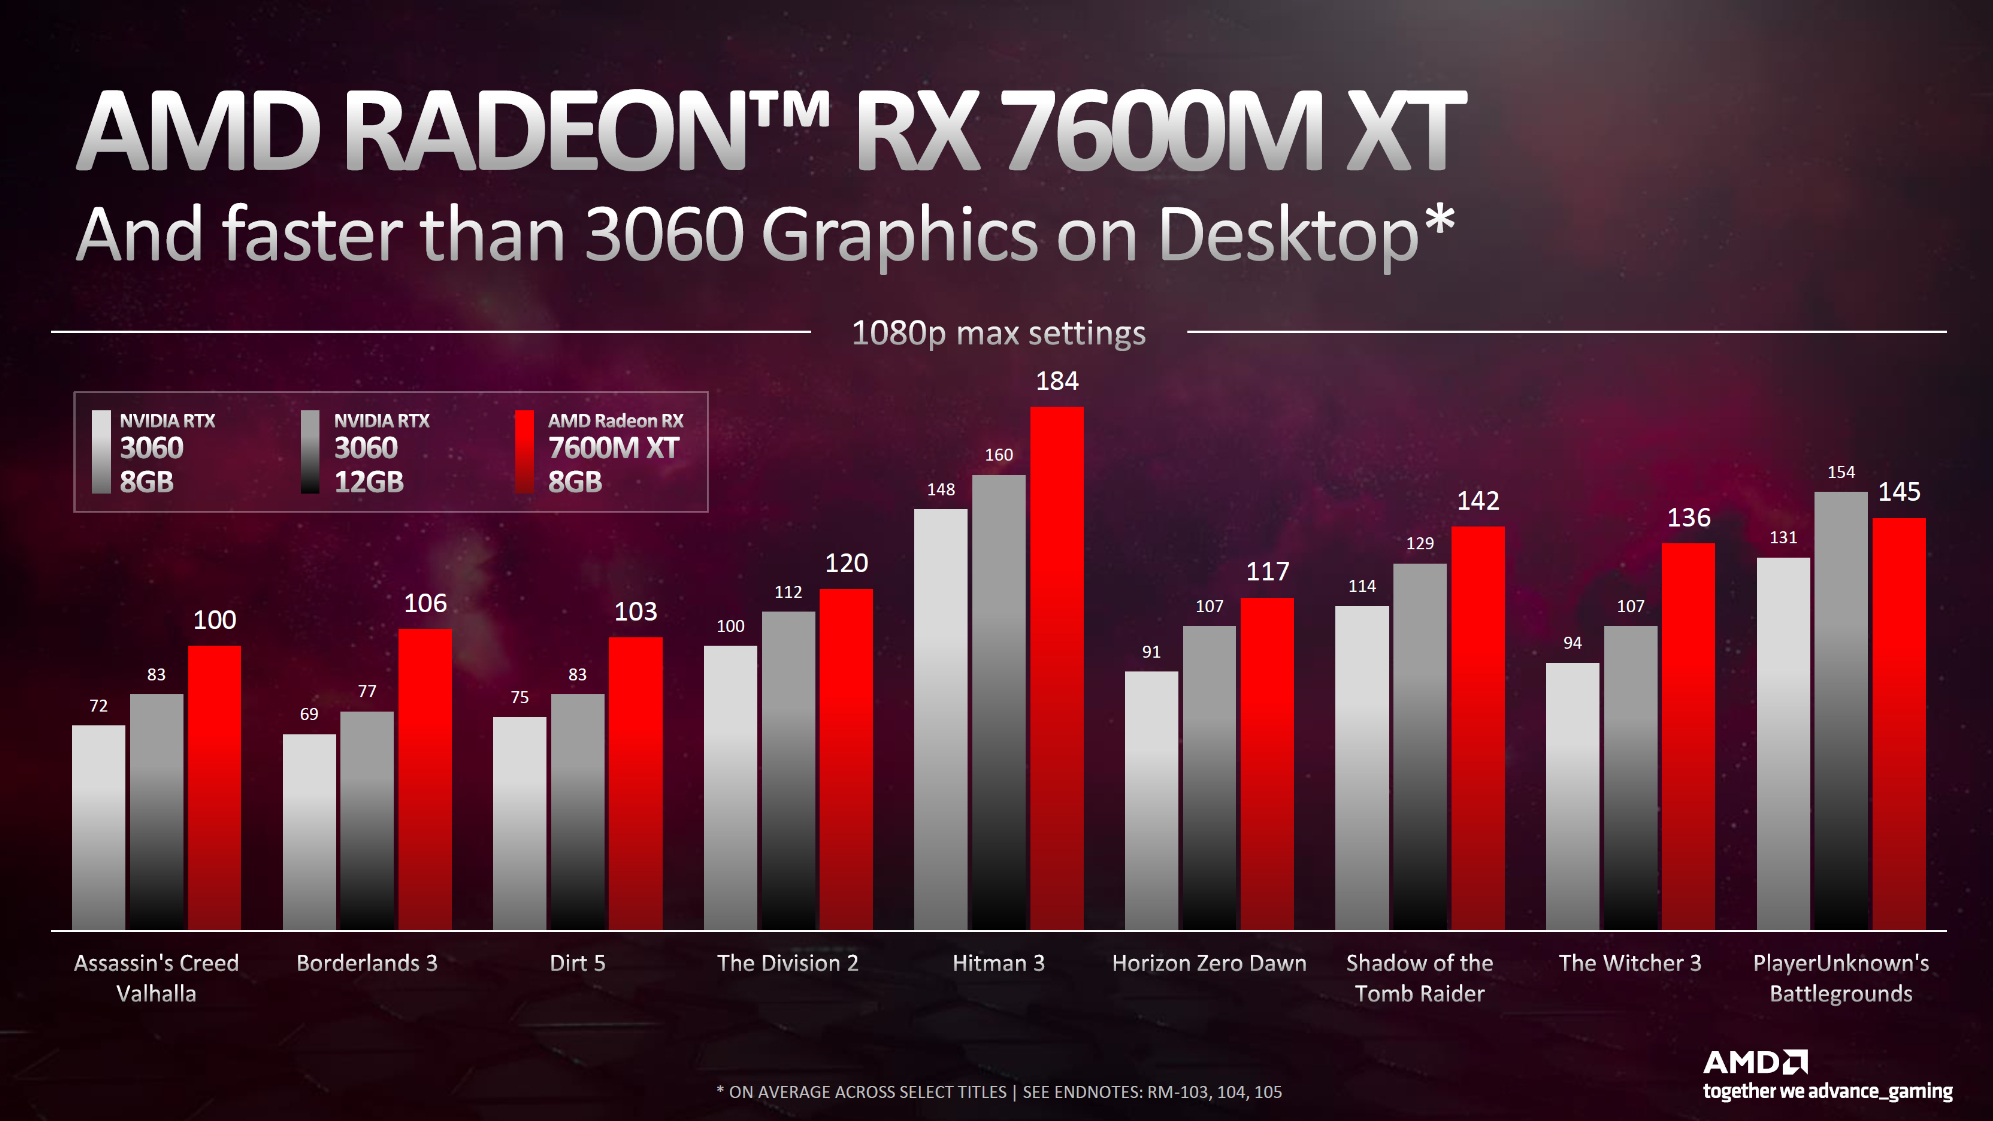 AMD press deck graph showing RX 7600M XT performance